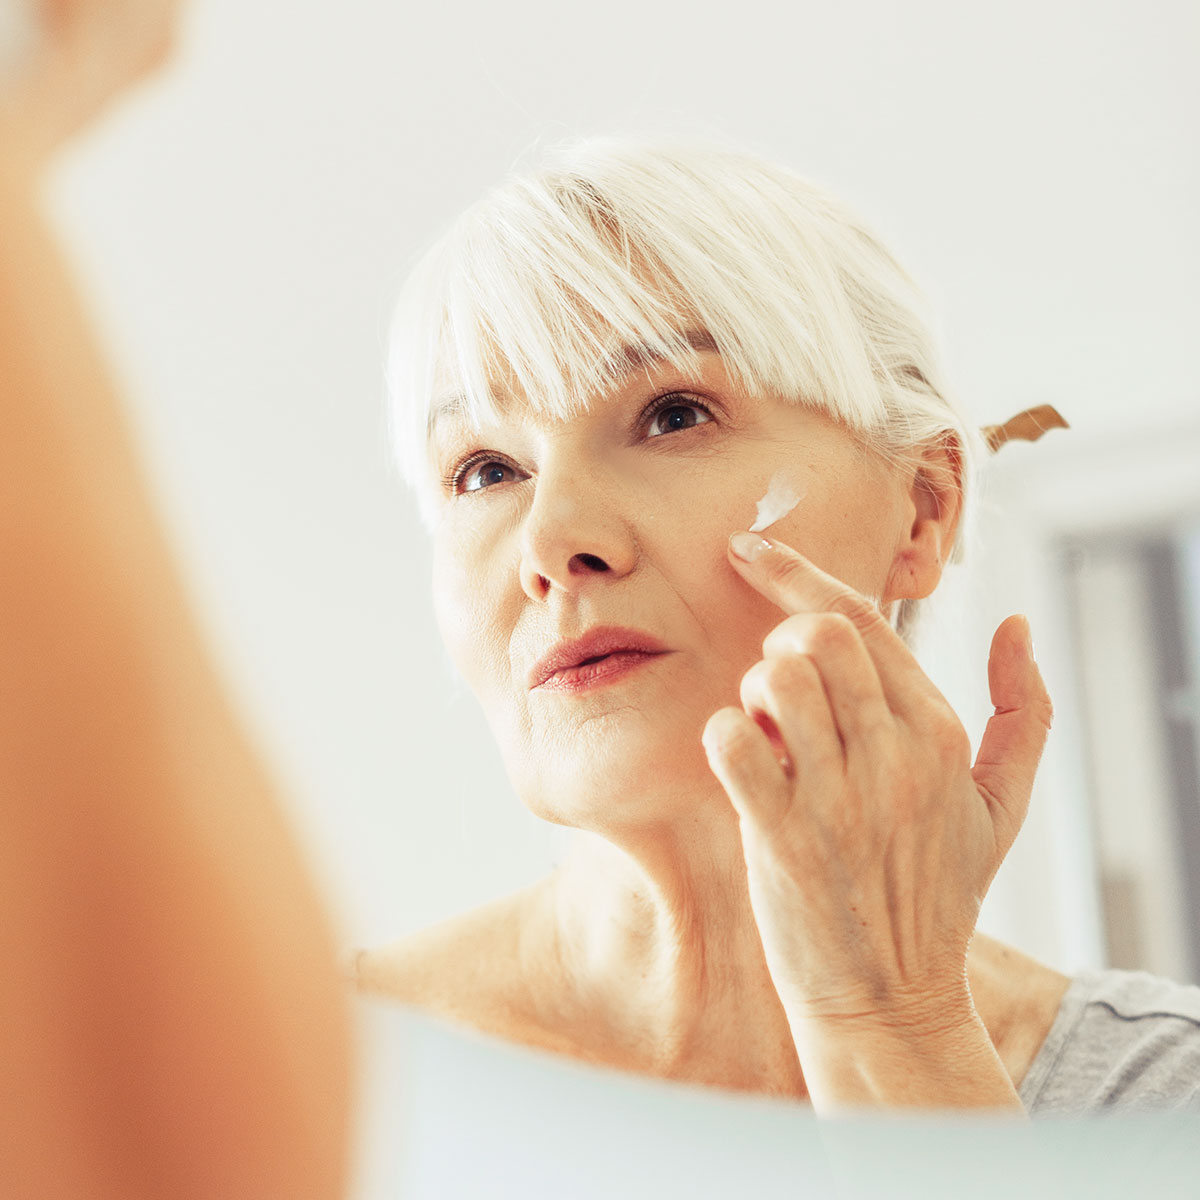 A Makeup Artist Tells Us The Best Eyeshadow For Women Over 50